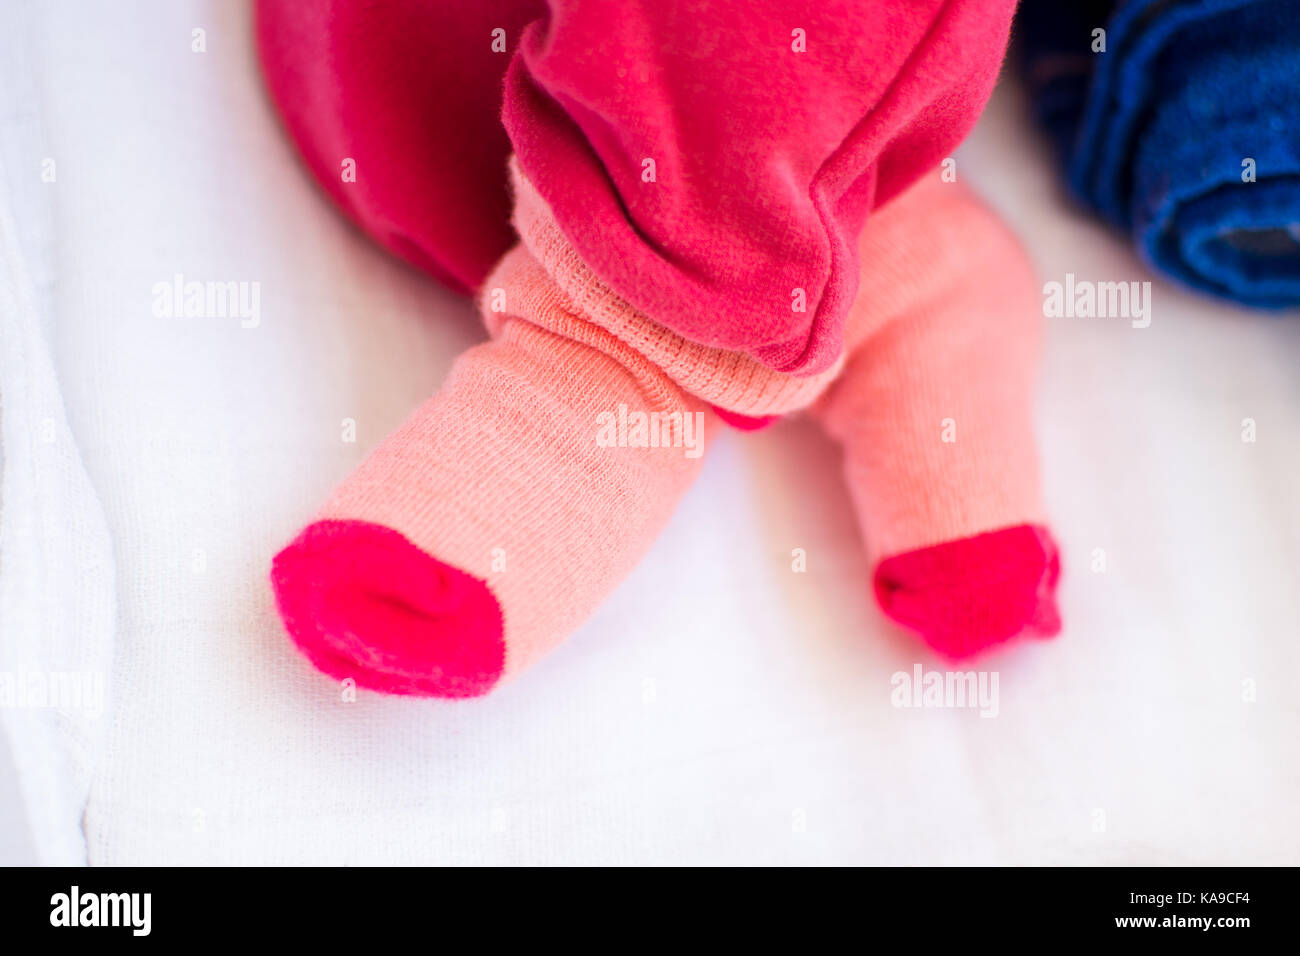 Baby girl feet wearing cute socks close up Stock Photo